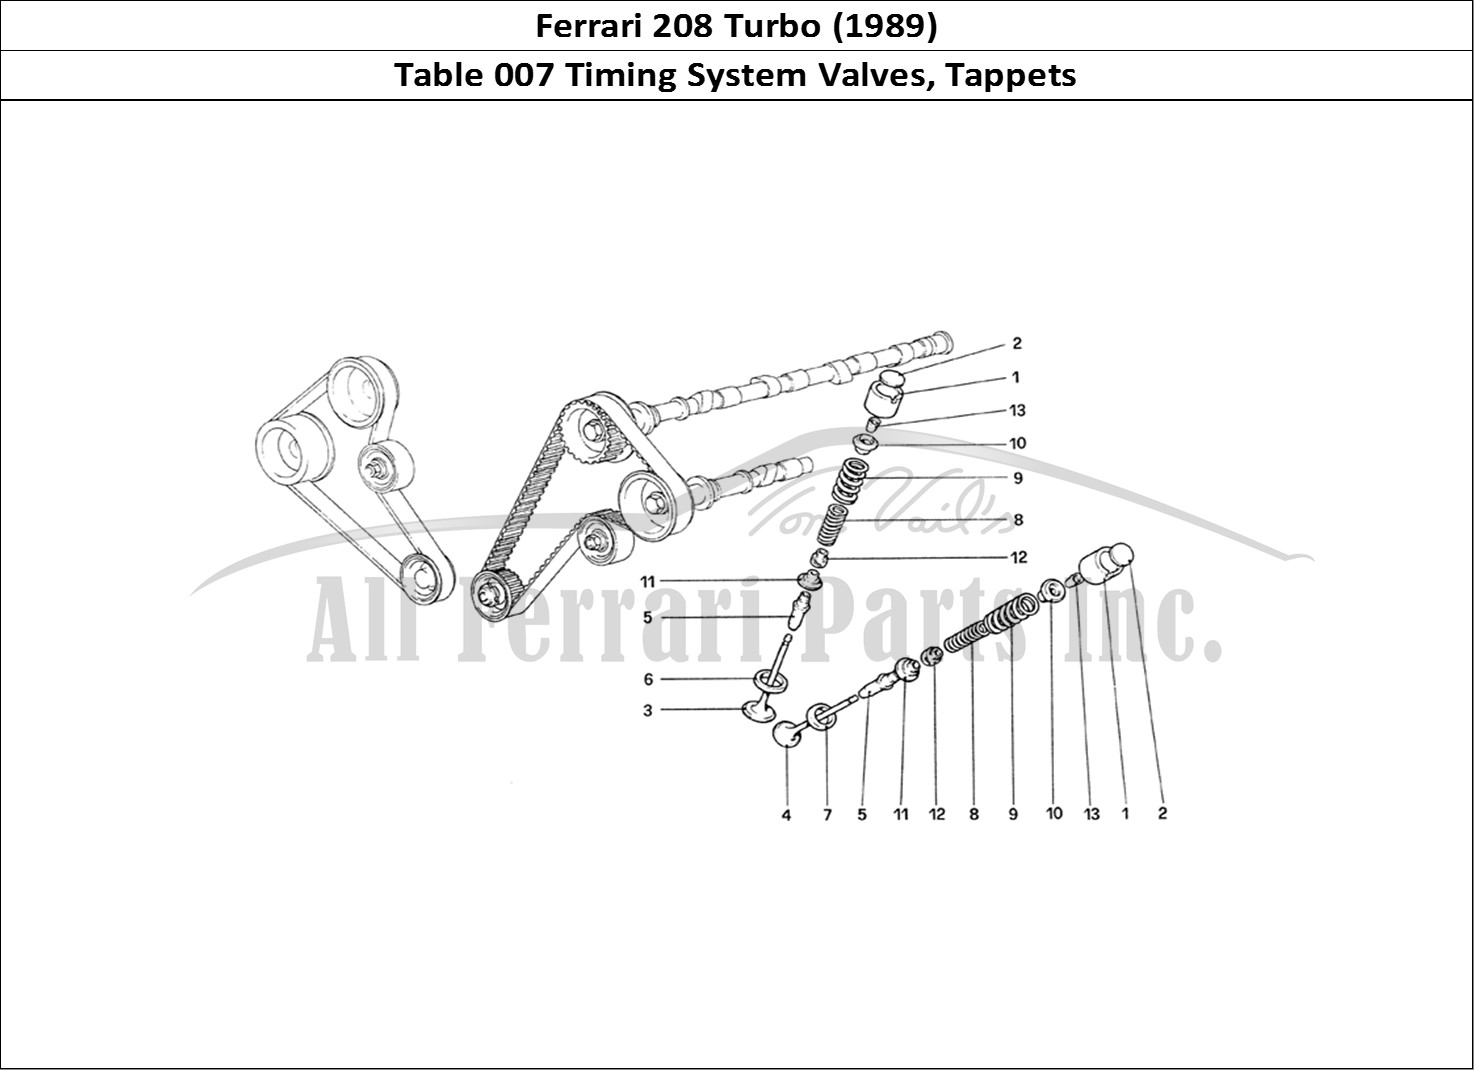 Ferrari Parts Ferrari 208 Turbo (1989) Page 007 Timing System - Tapppets